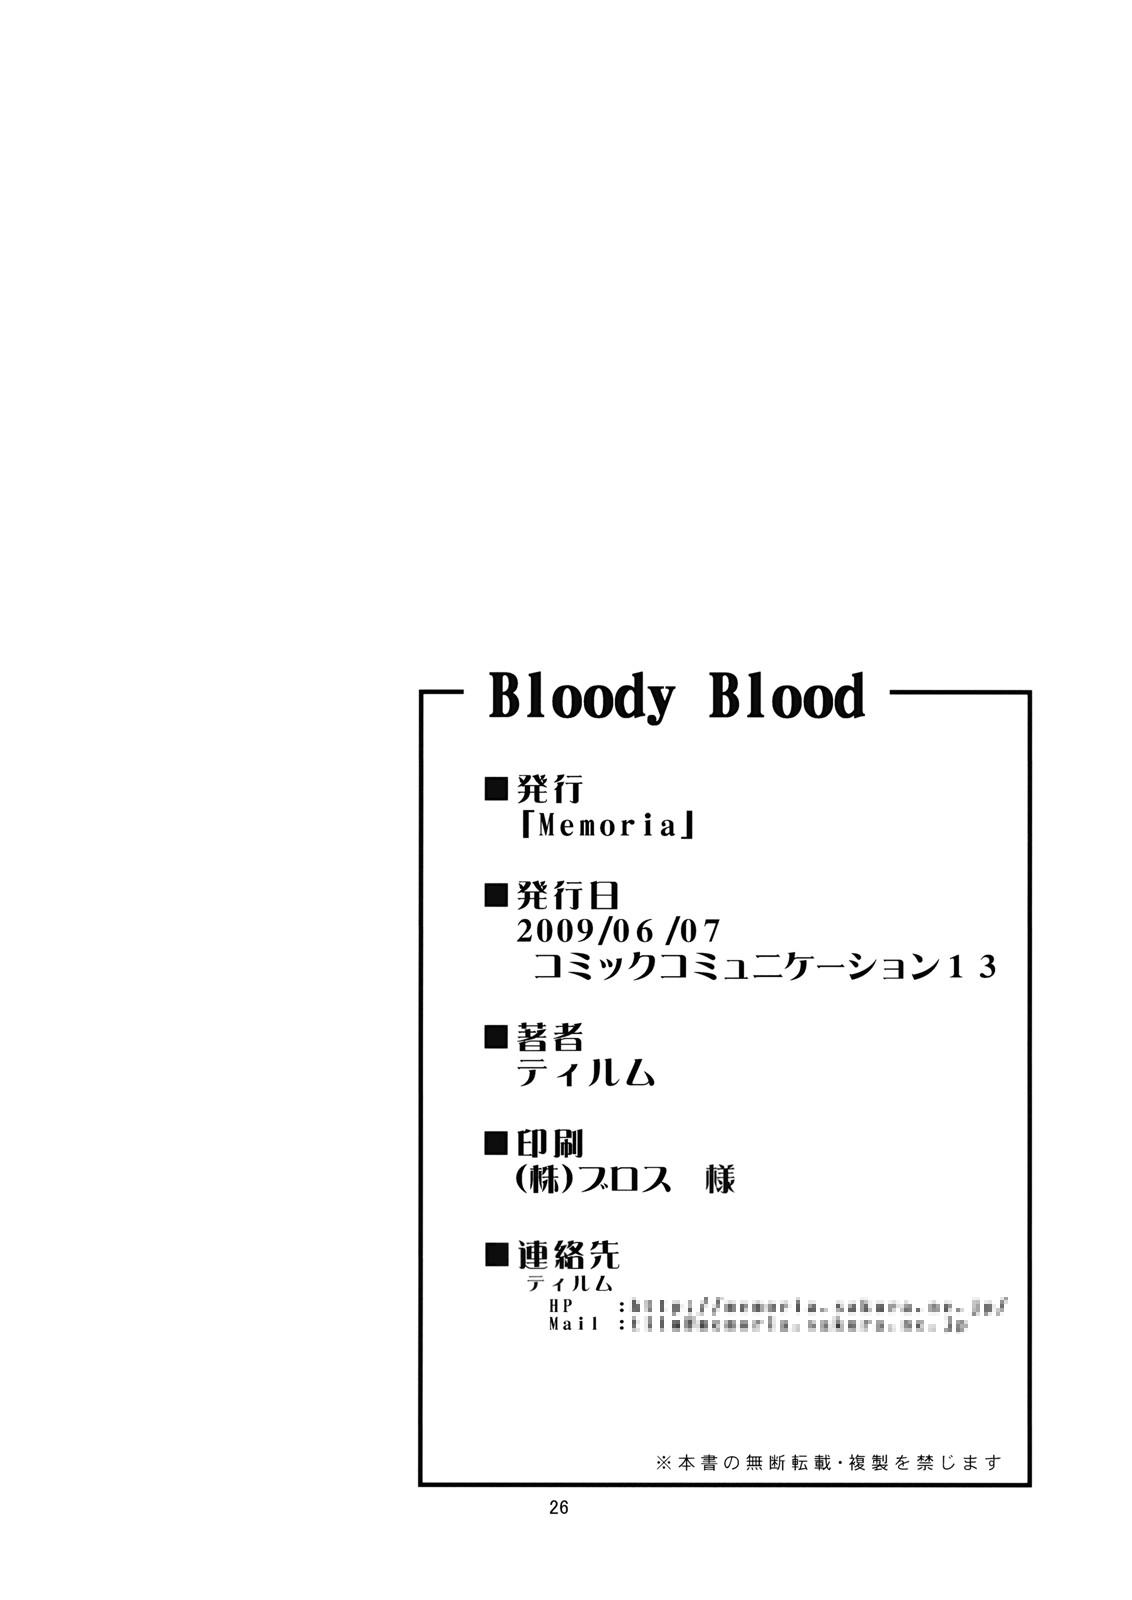 - Bloody Blood 25